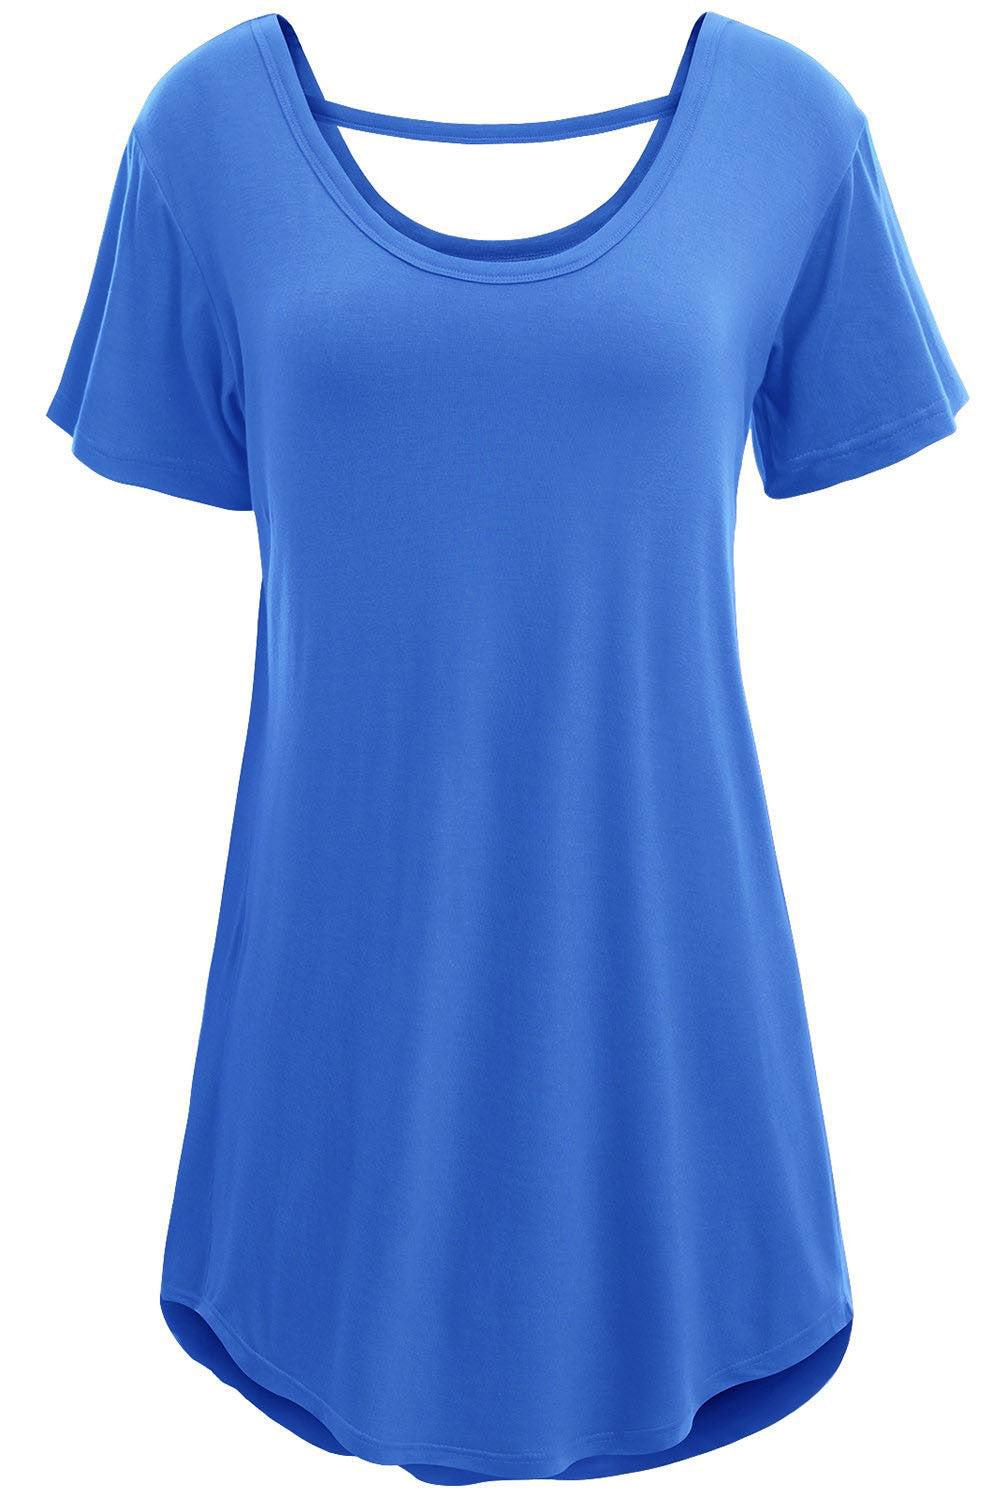 Blue Scoop Neck Short Sleeve Basic Long T-shirt Top